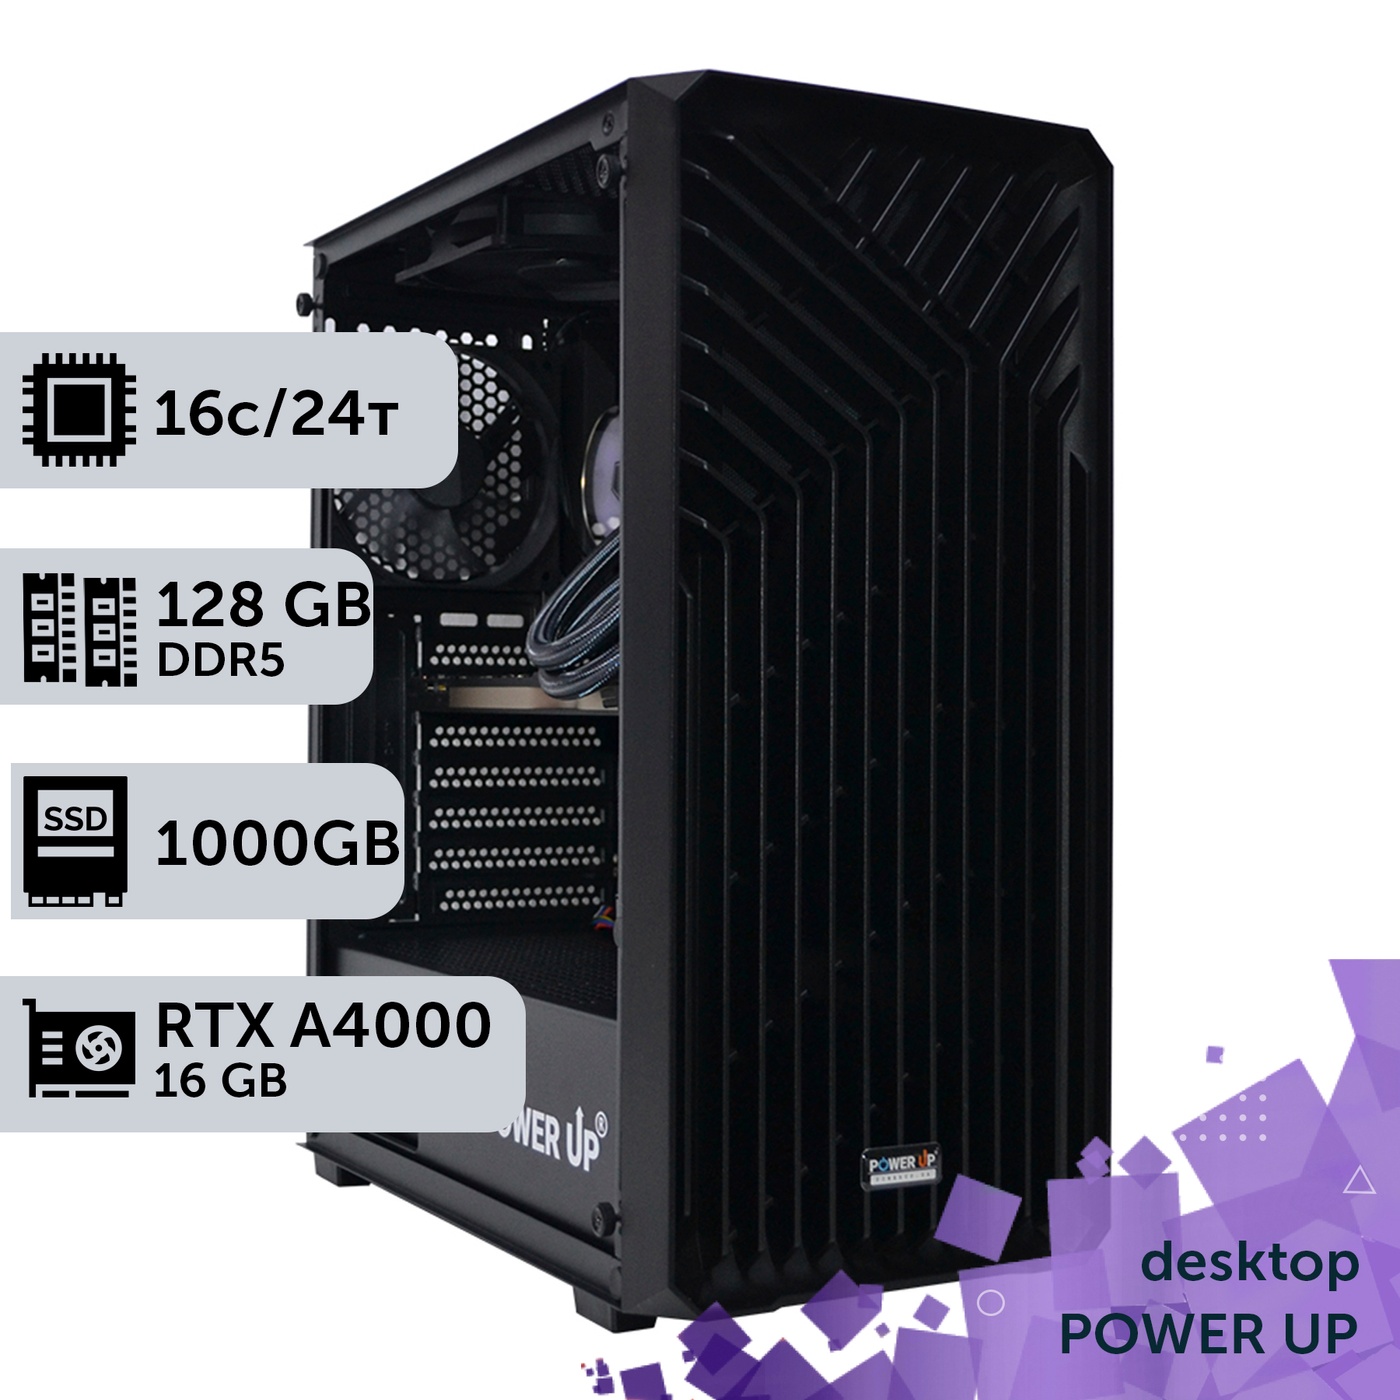 Робоча станція PowerUp Desktop #278 Core i7 13700K/128 GB/SSD 1TB/NVIDIA Quadro RTX A4000 16GB